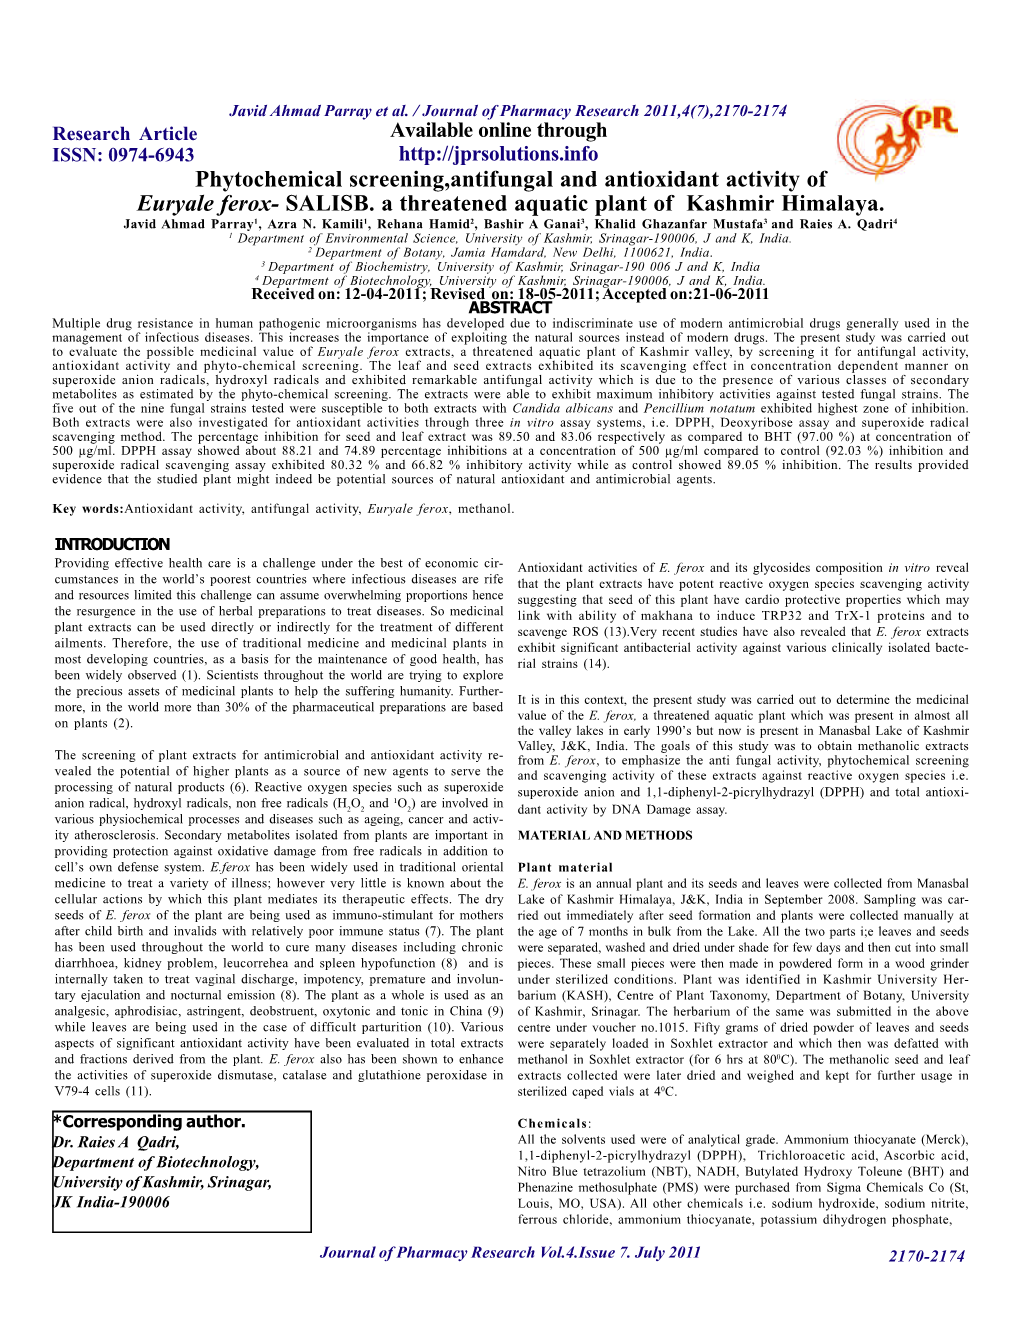 Phytochemical Screening,Antifungal and Antioxidant Activity of Euryale Ferox- SALISB